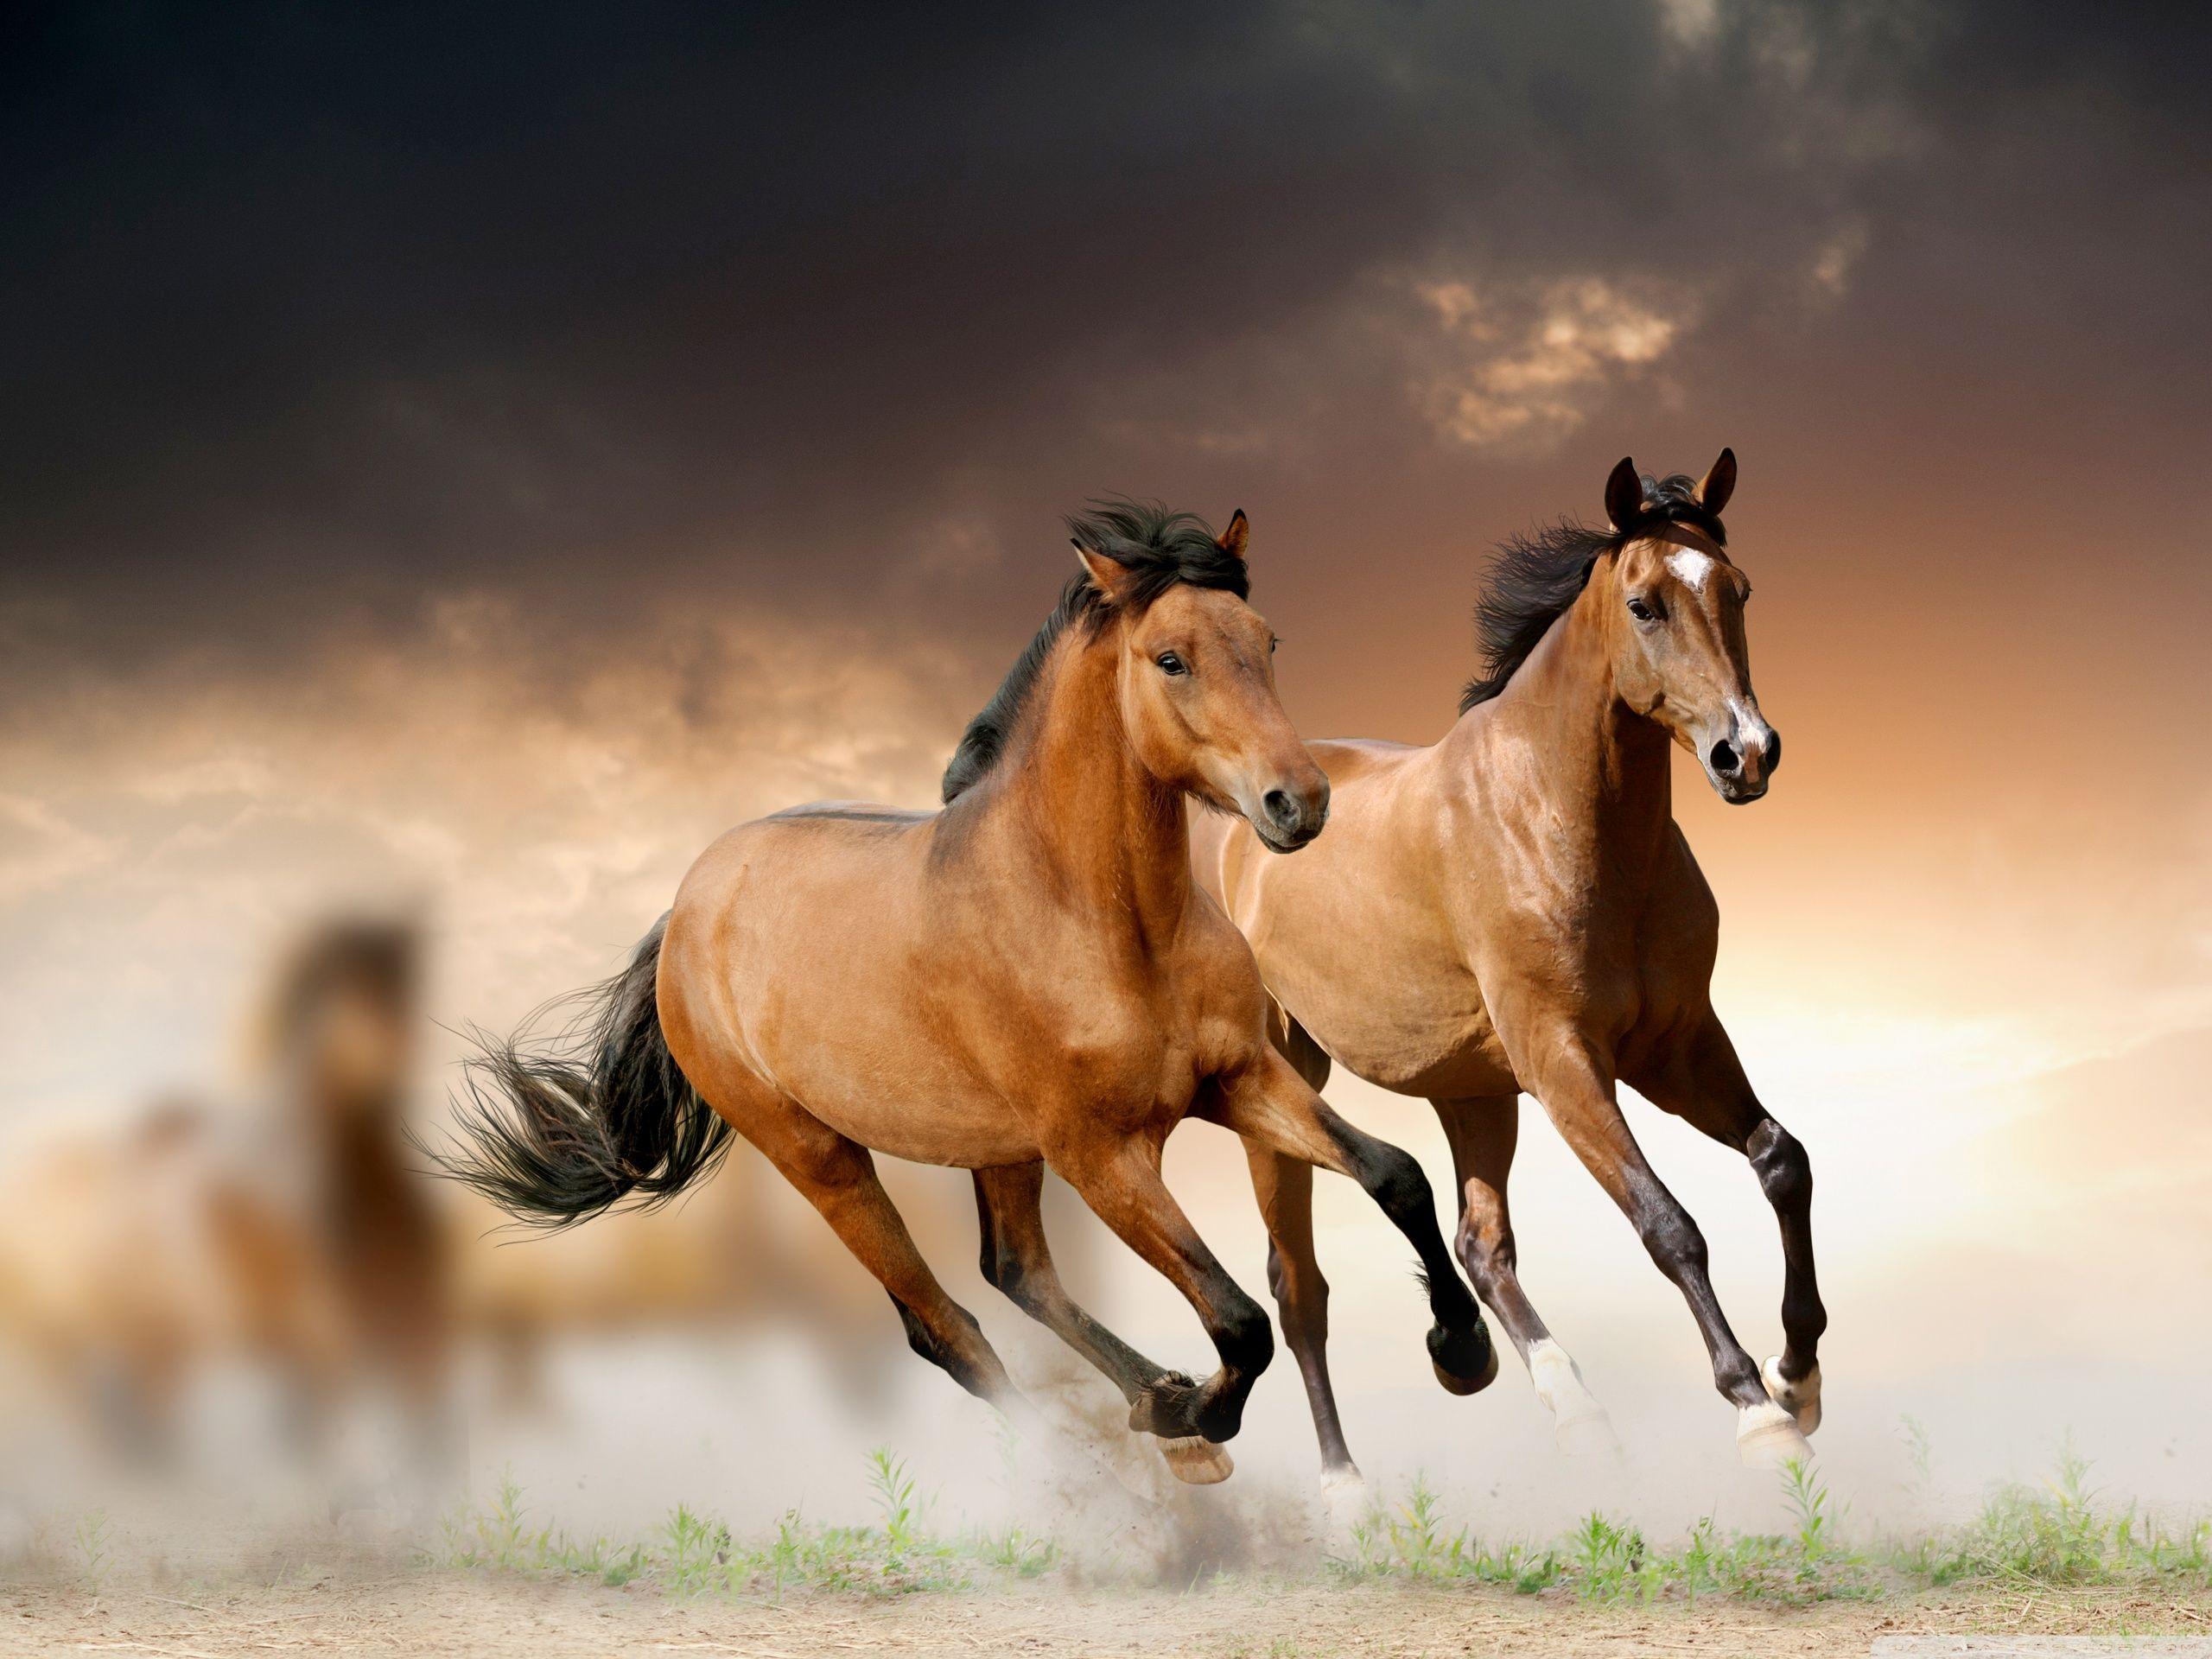 Horses Running HD desktop wallpaper, High Definition, Fullscreen